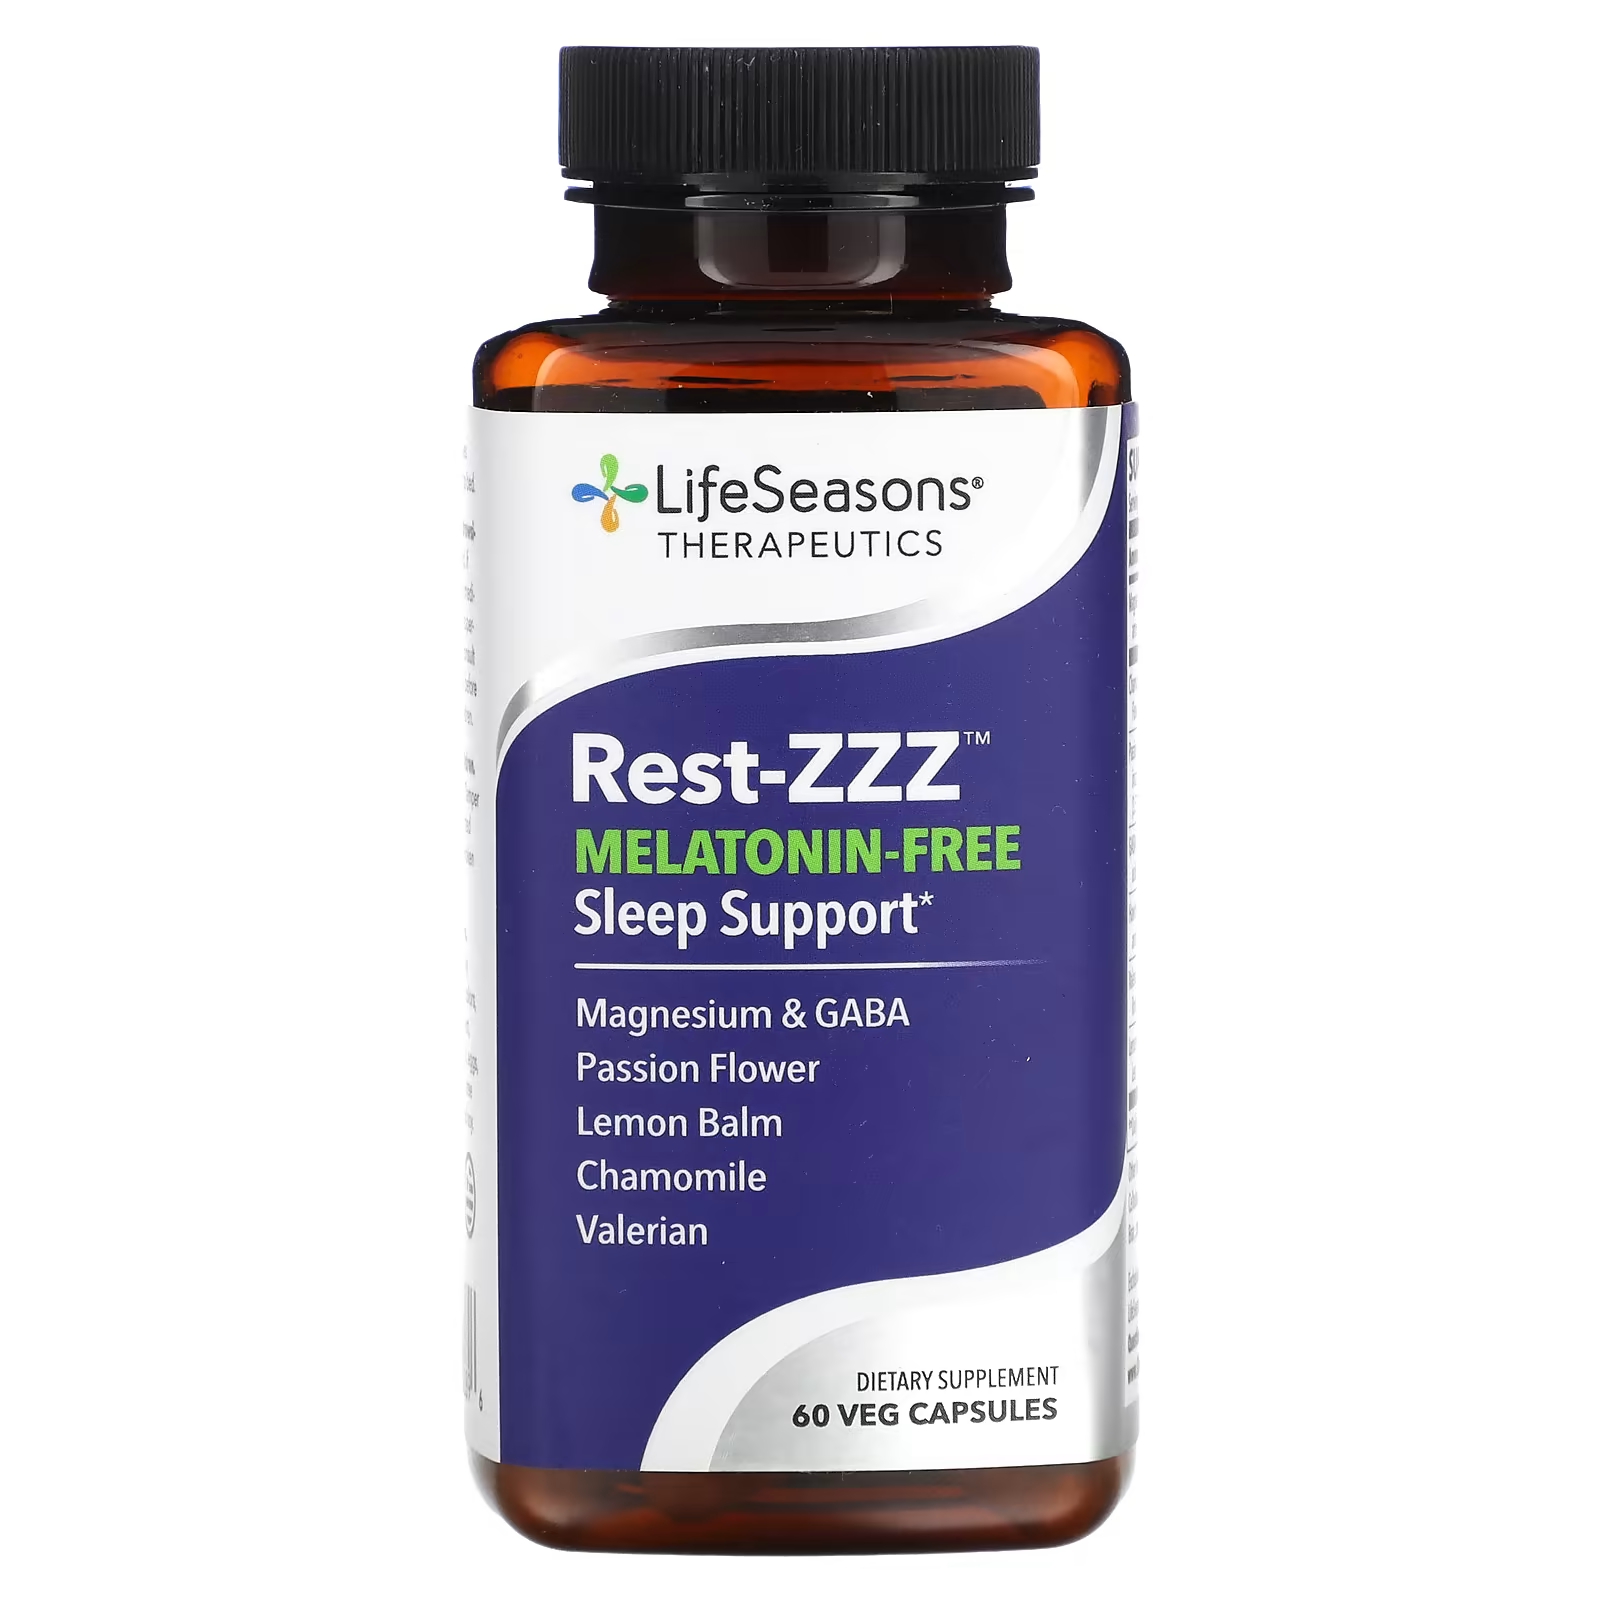 LifeSeasons Rest-ZZZ Поддержка сна без мелатонина, 60 растительных капсул solgar поддержка сна и стресса 60 растительных капсул